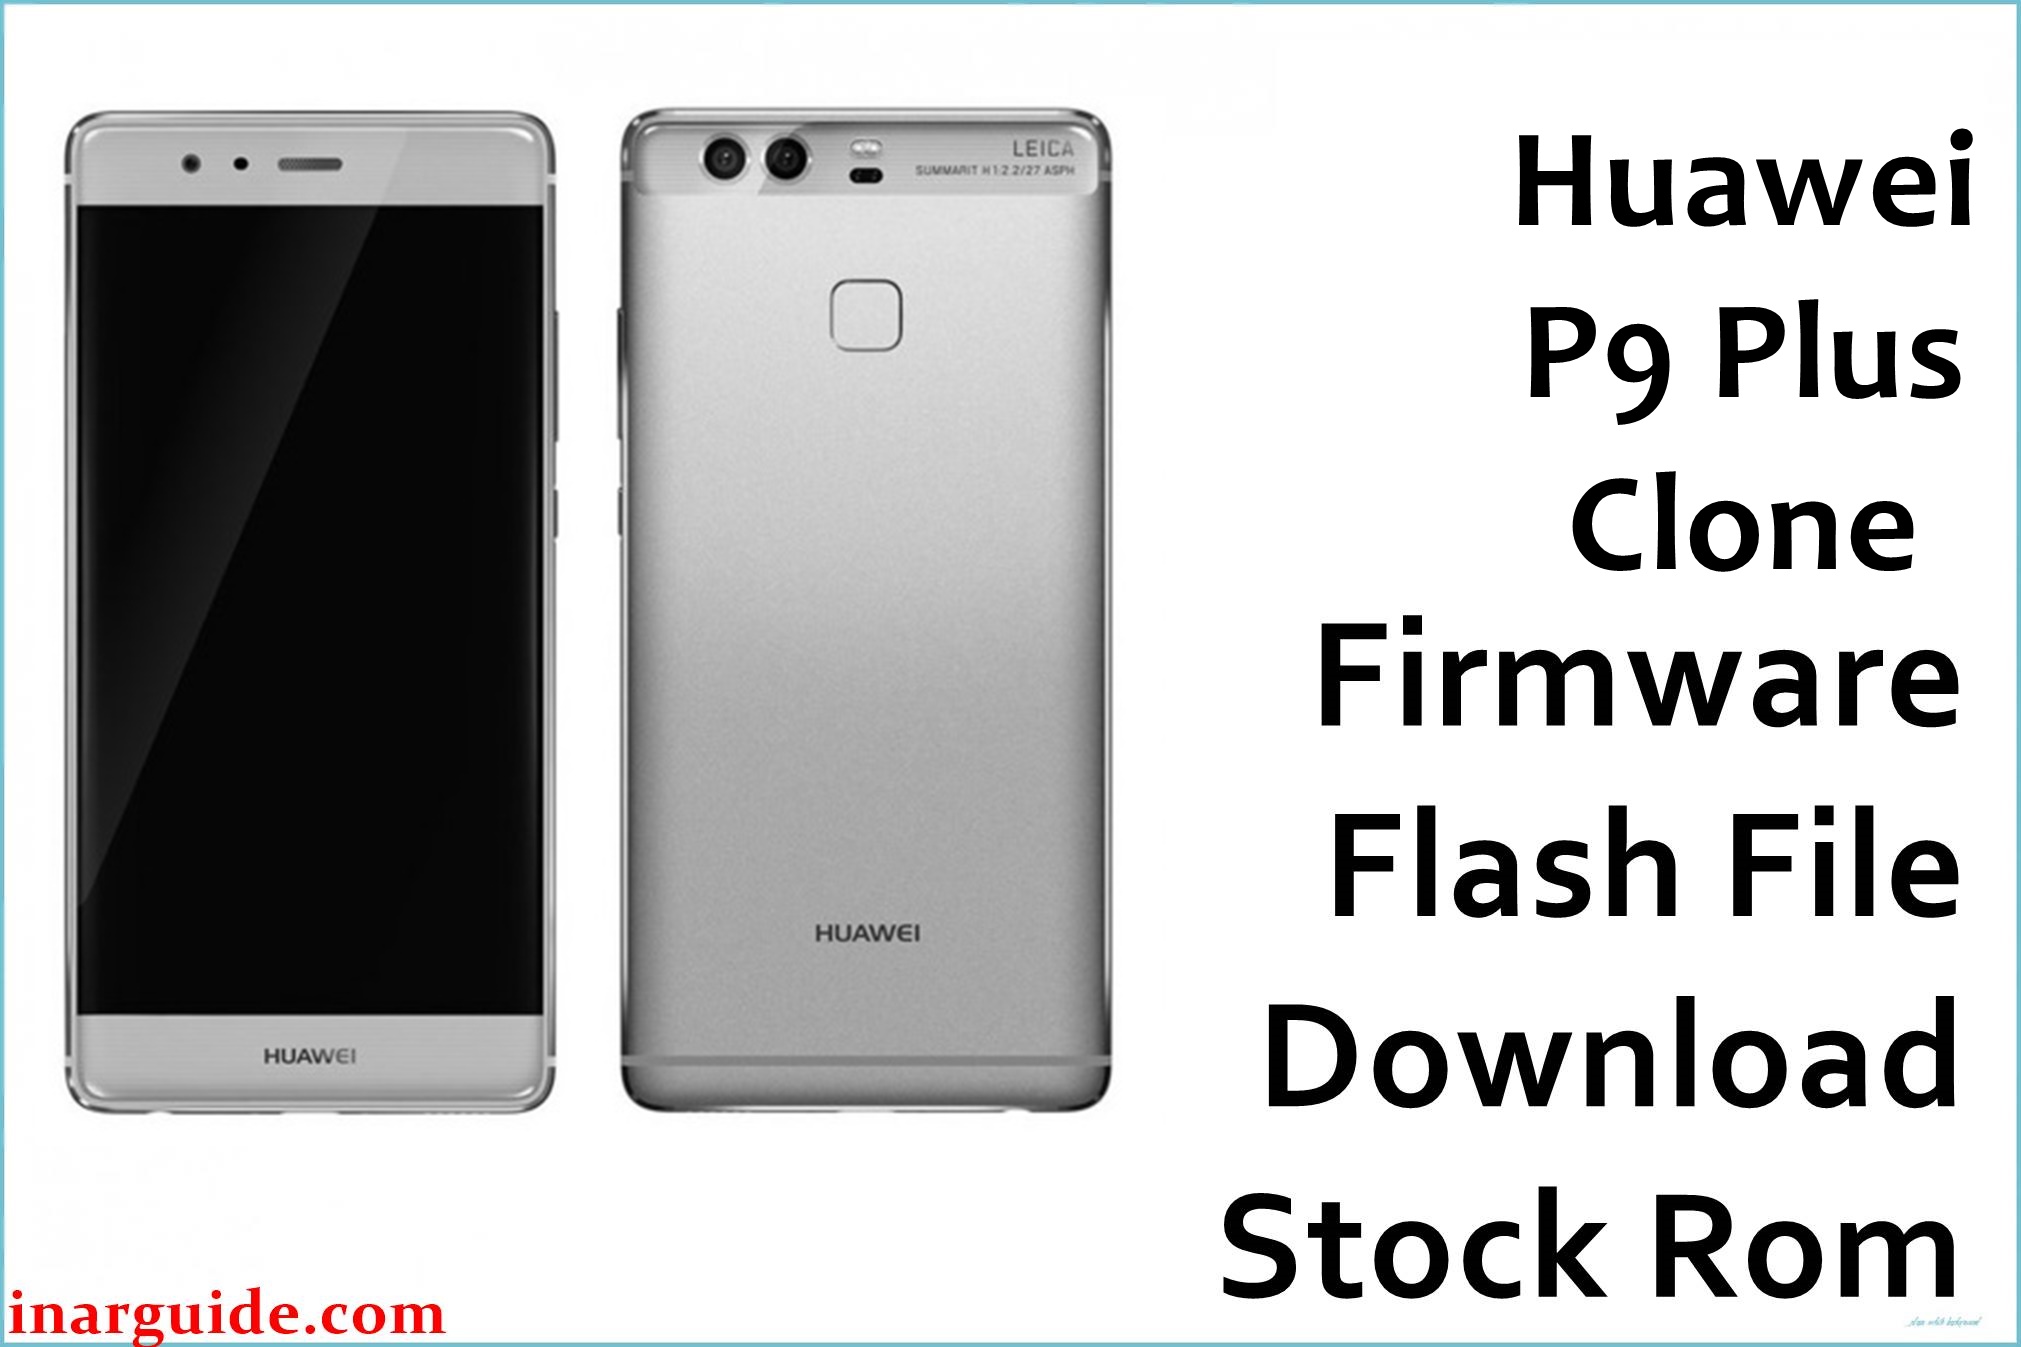 Huawei P9 Plus Clone